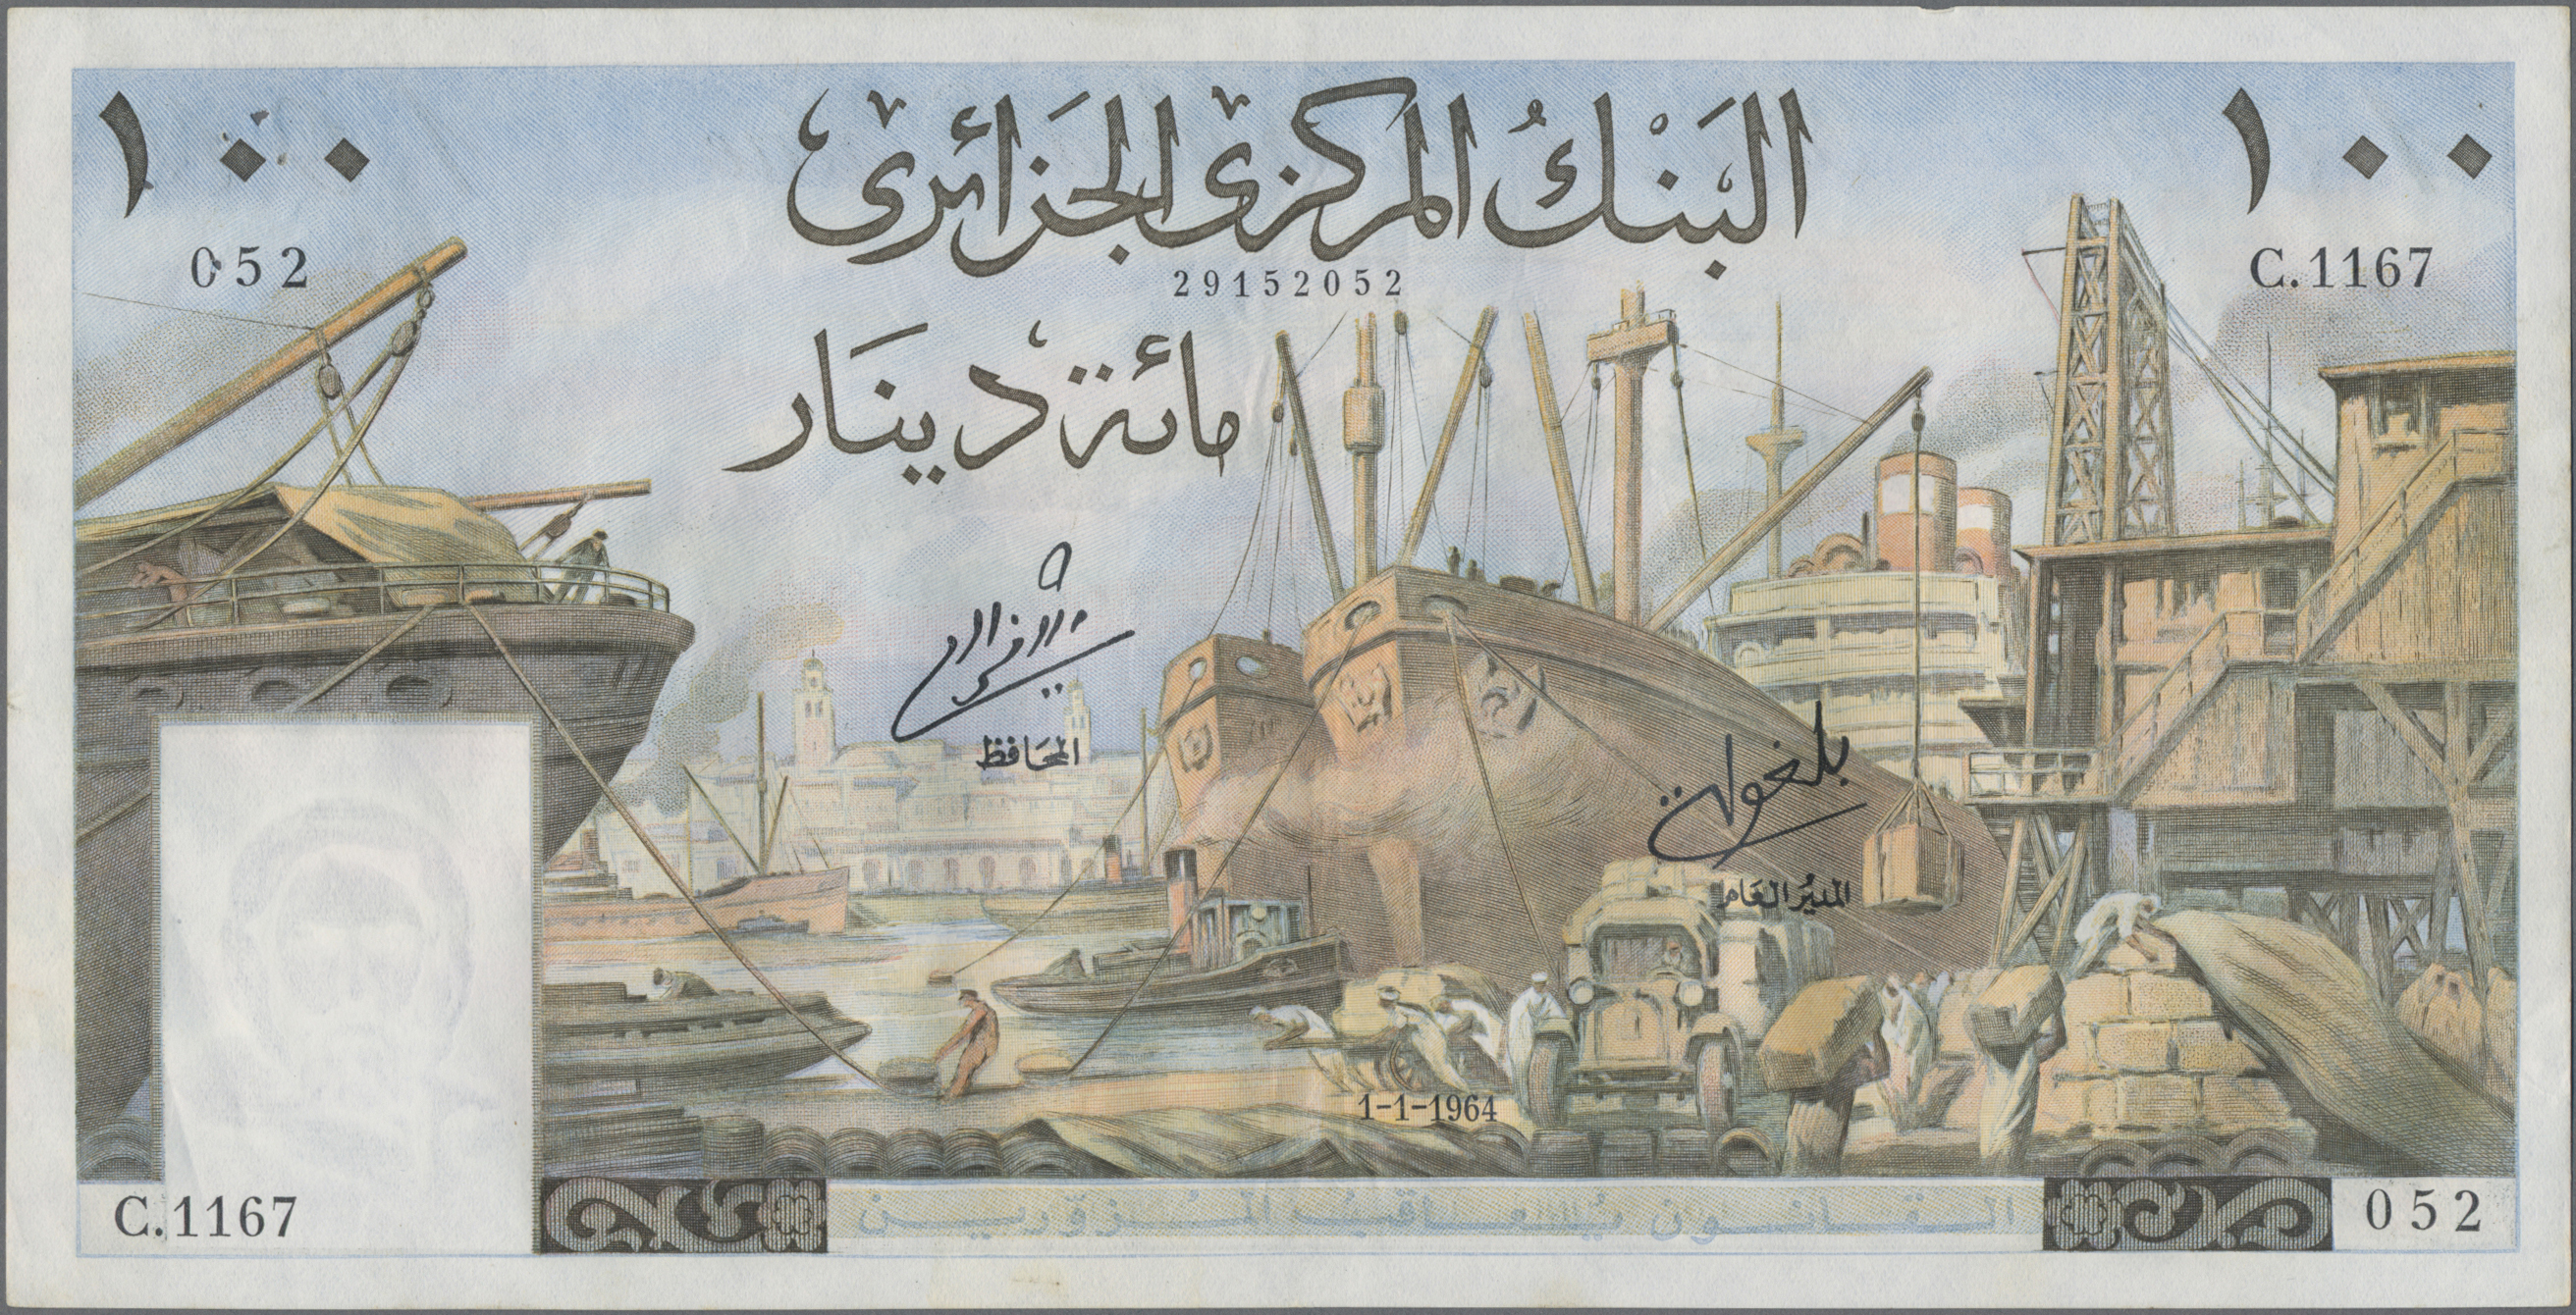 Lot 00026 - Algeria / Algerien | Banknoten  -  Auktionshaus Christoph Gärtner GmbH & Co. KG 55th AUCTION - Day 1